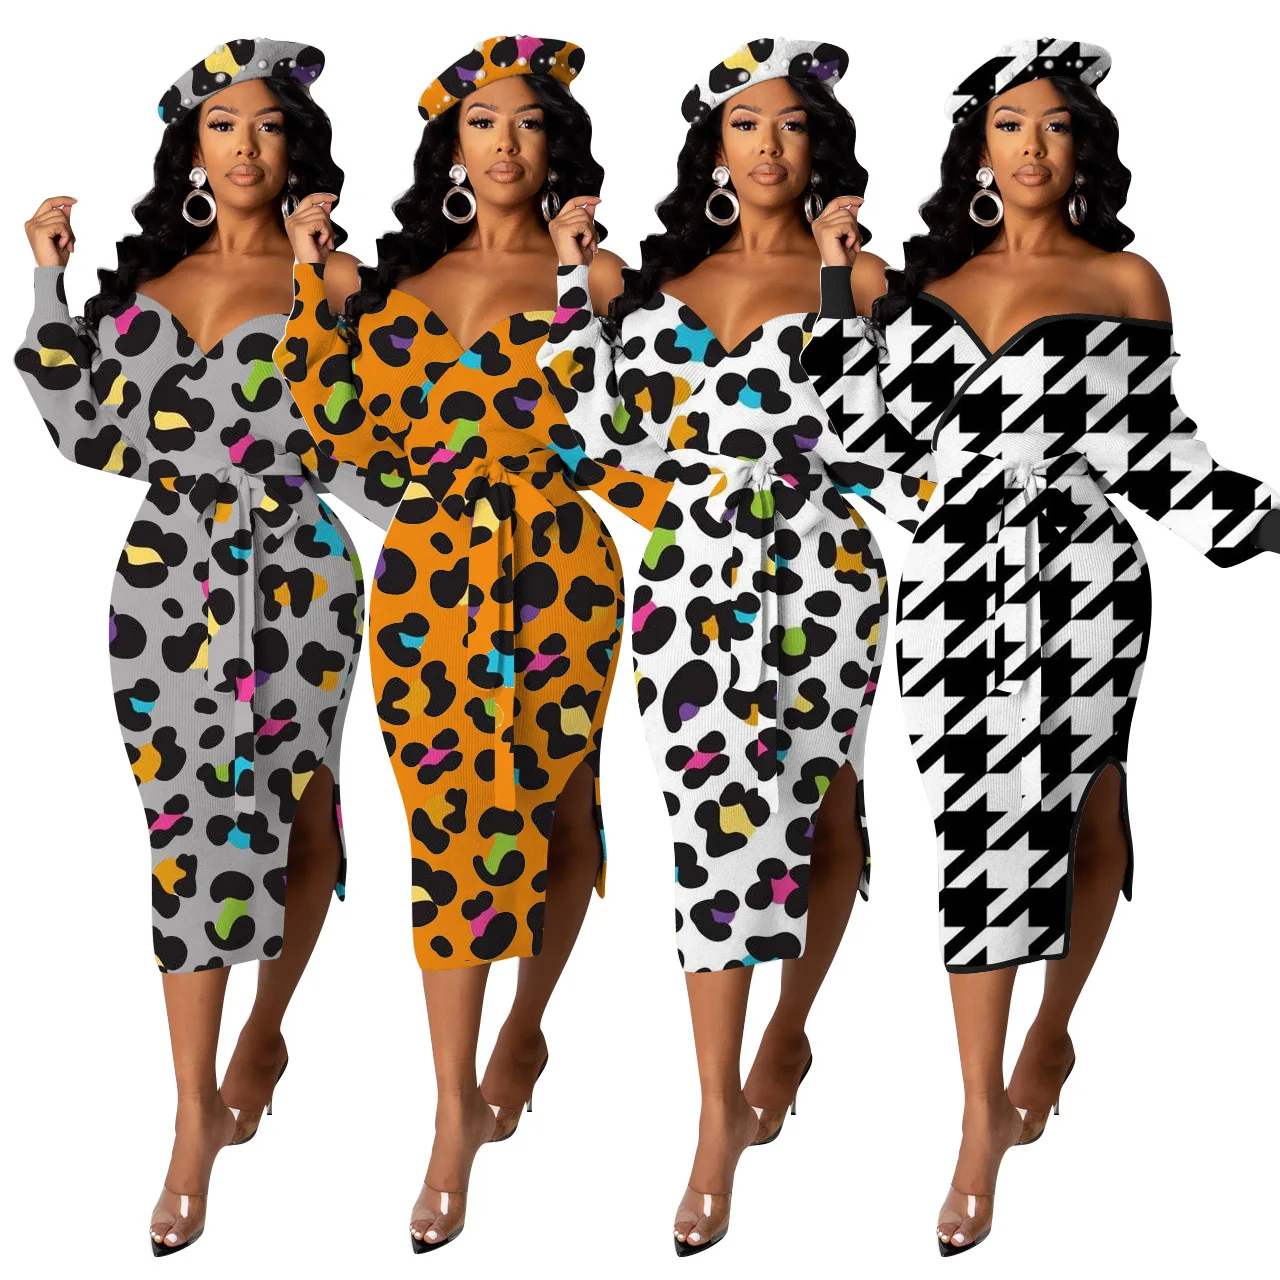 

Fall Wint Sexy Women Clothing Long Sleeve Trendy Dew Shoulder Leopard Print Mid Calf Dress, White, orange, gray, black white